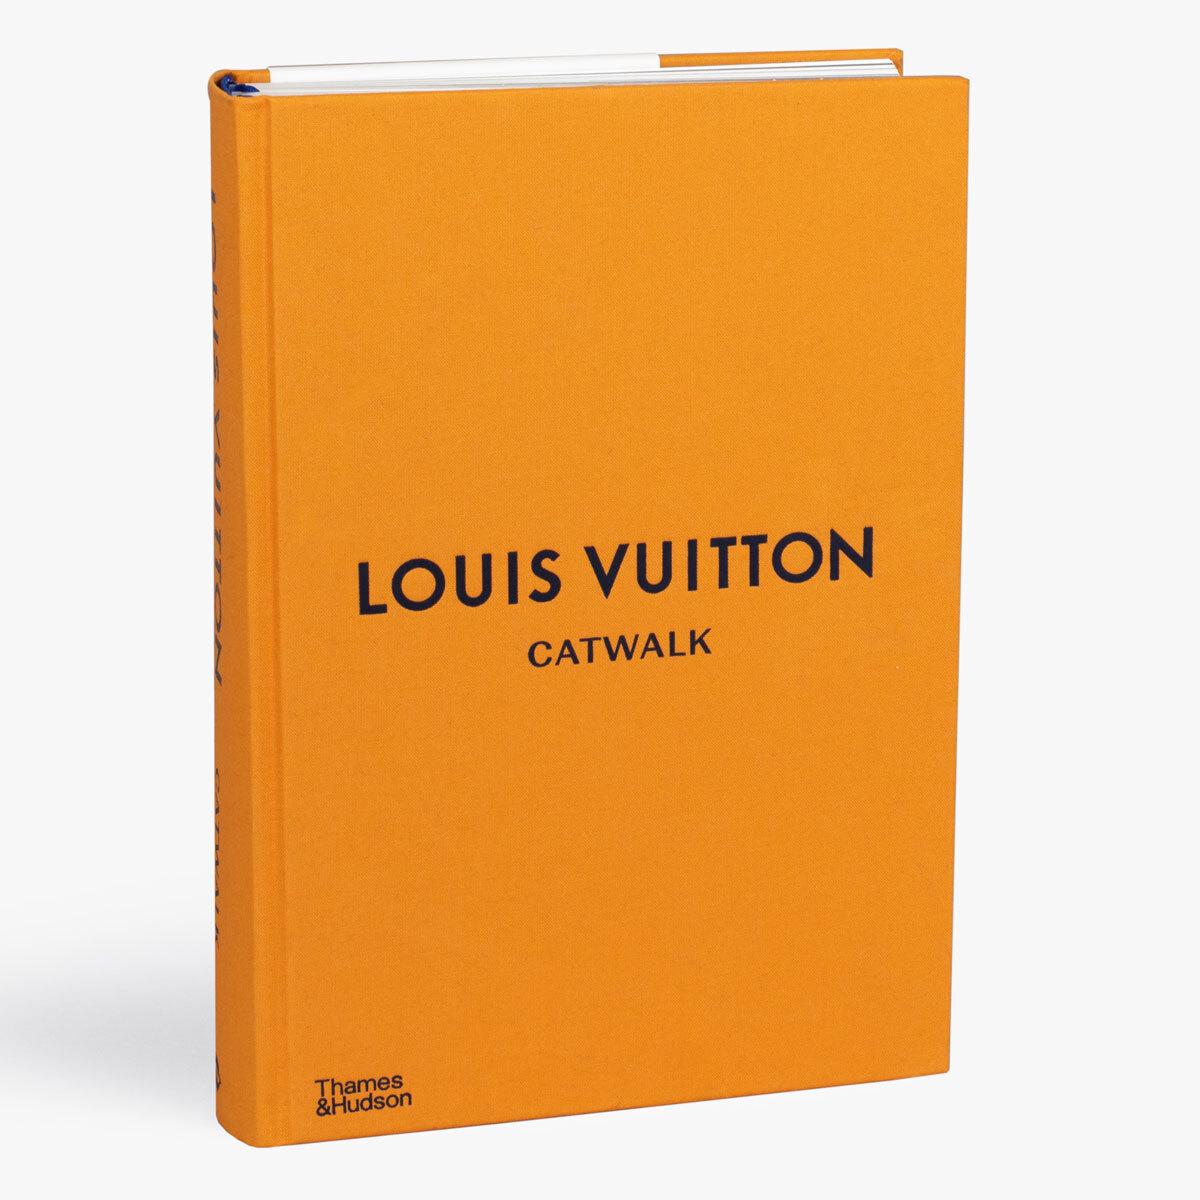 NEW Gucci & CHANEL & Louis Vuitton & Versace Tissue Paper